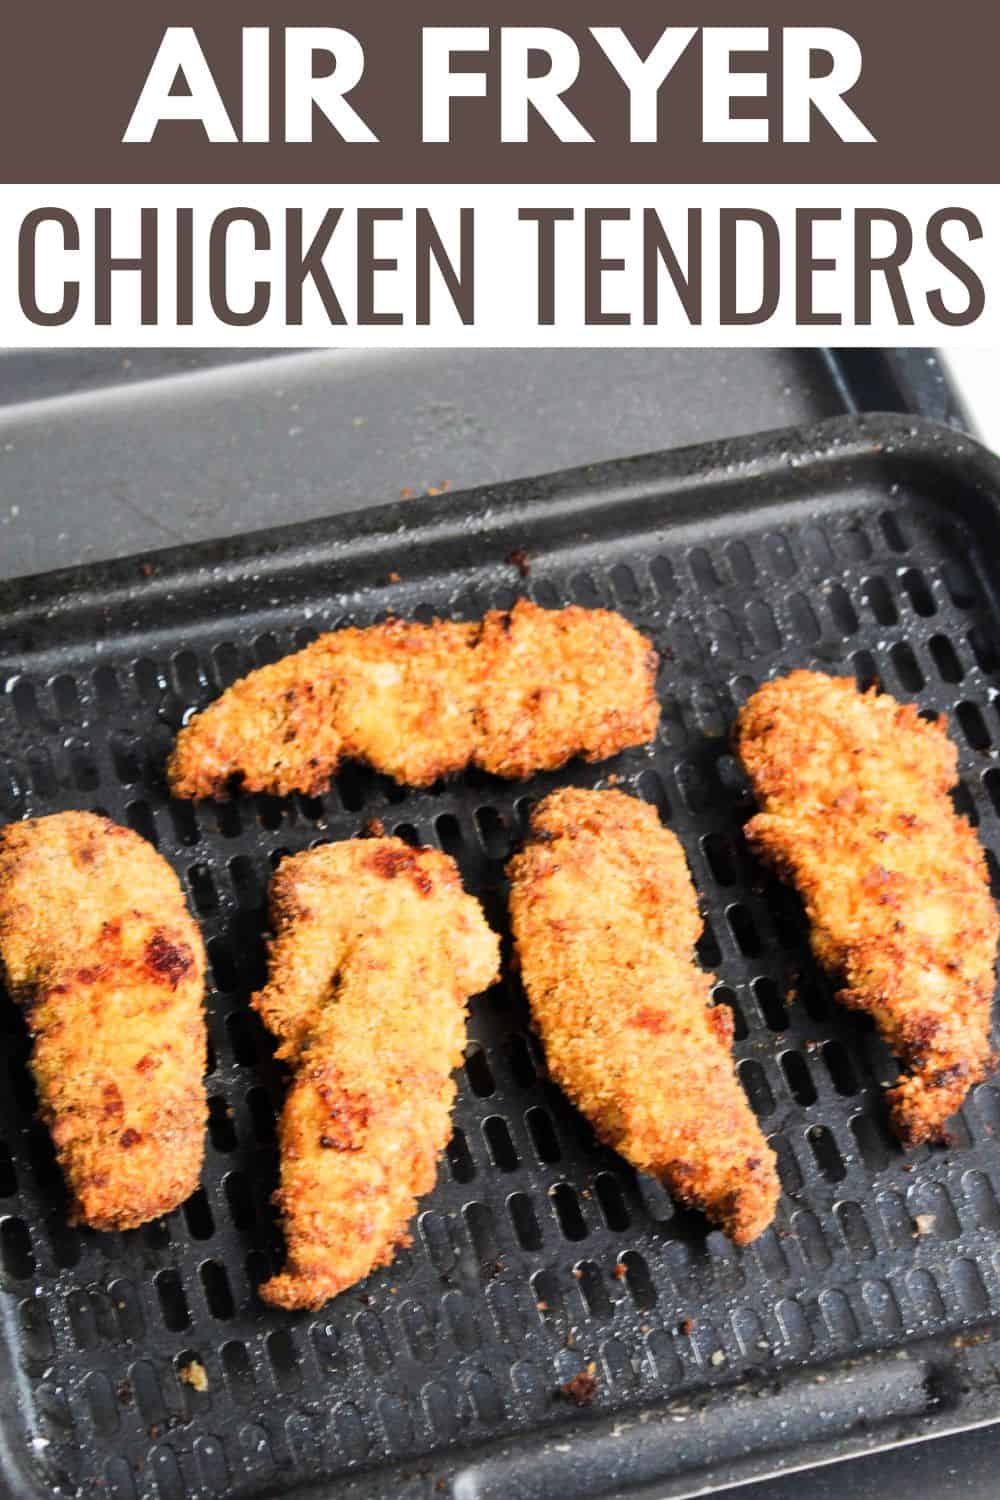 Air fryer chicken tenders on tray.